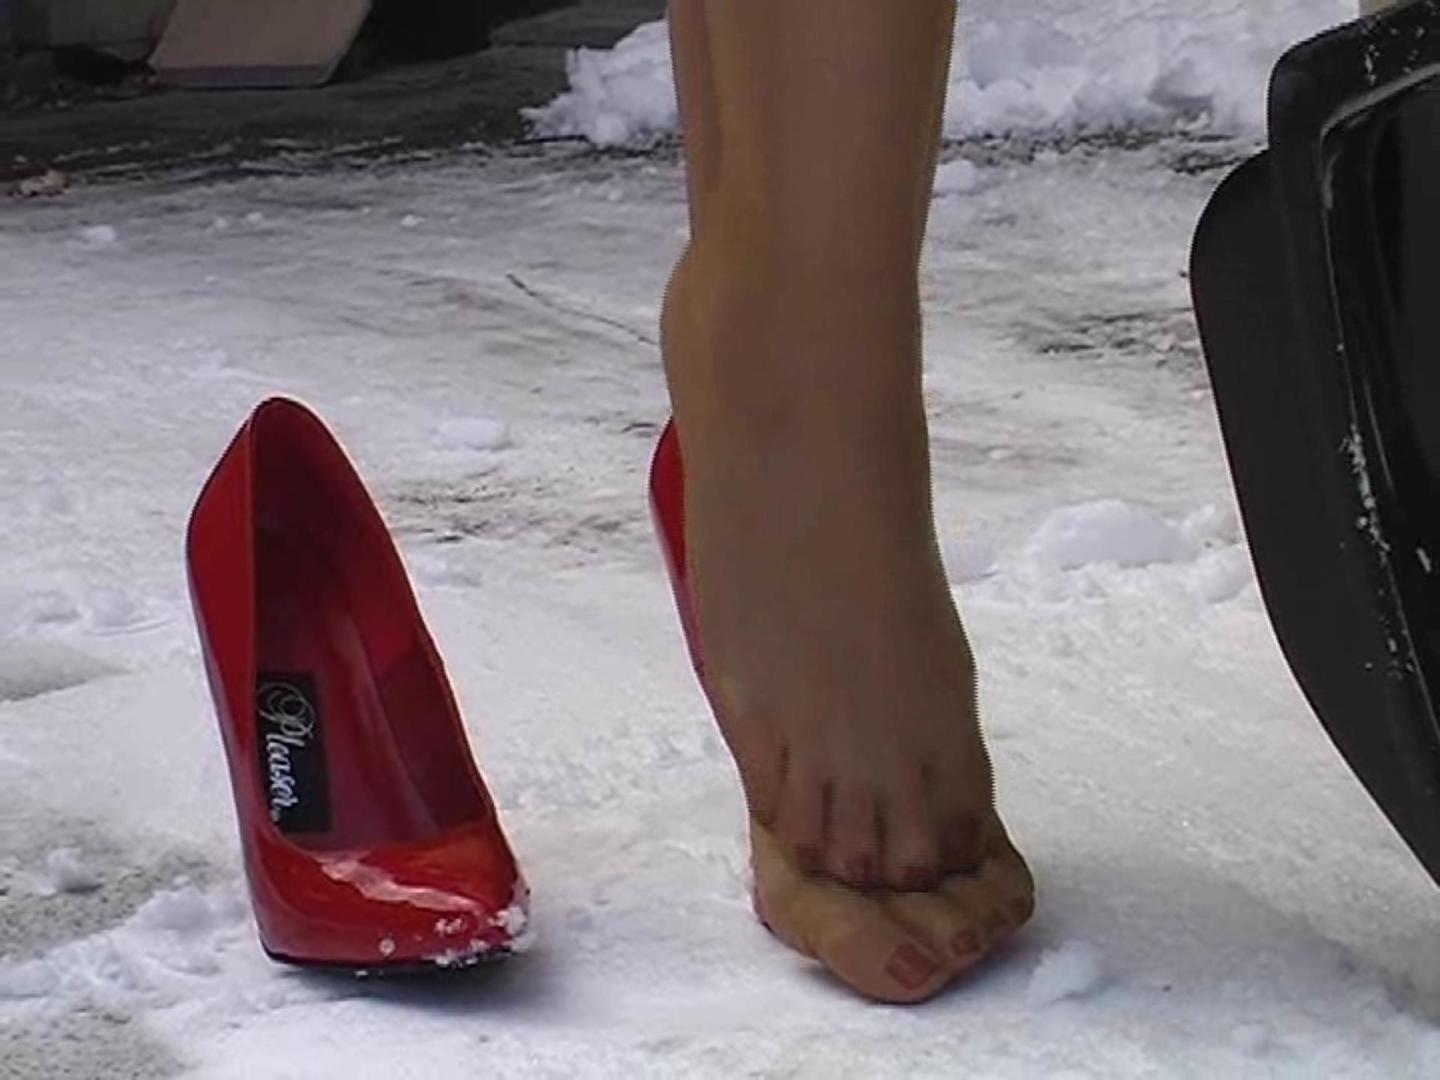 Nylon feet, high heels, shoveling snow?